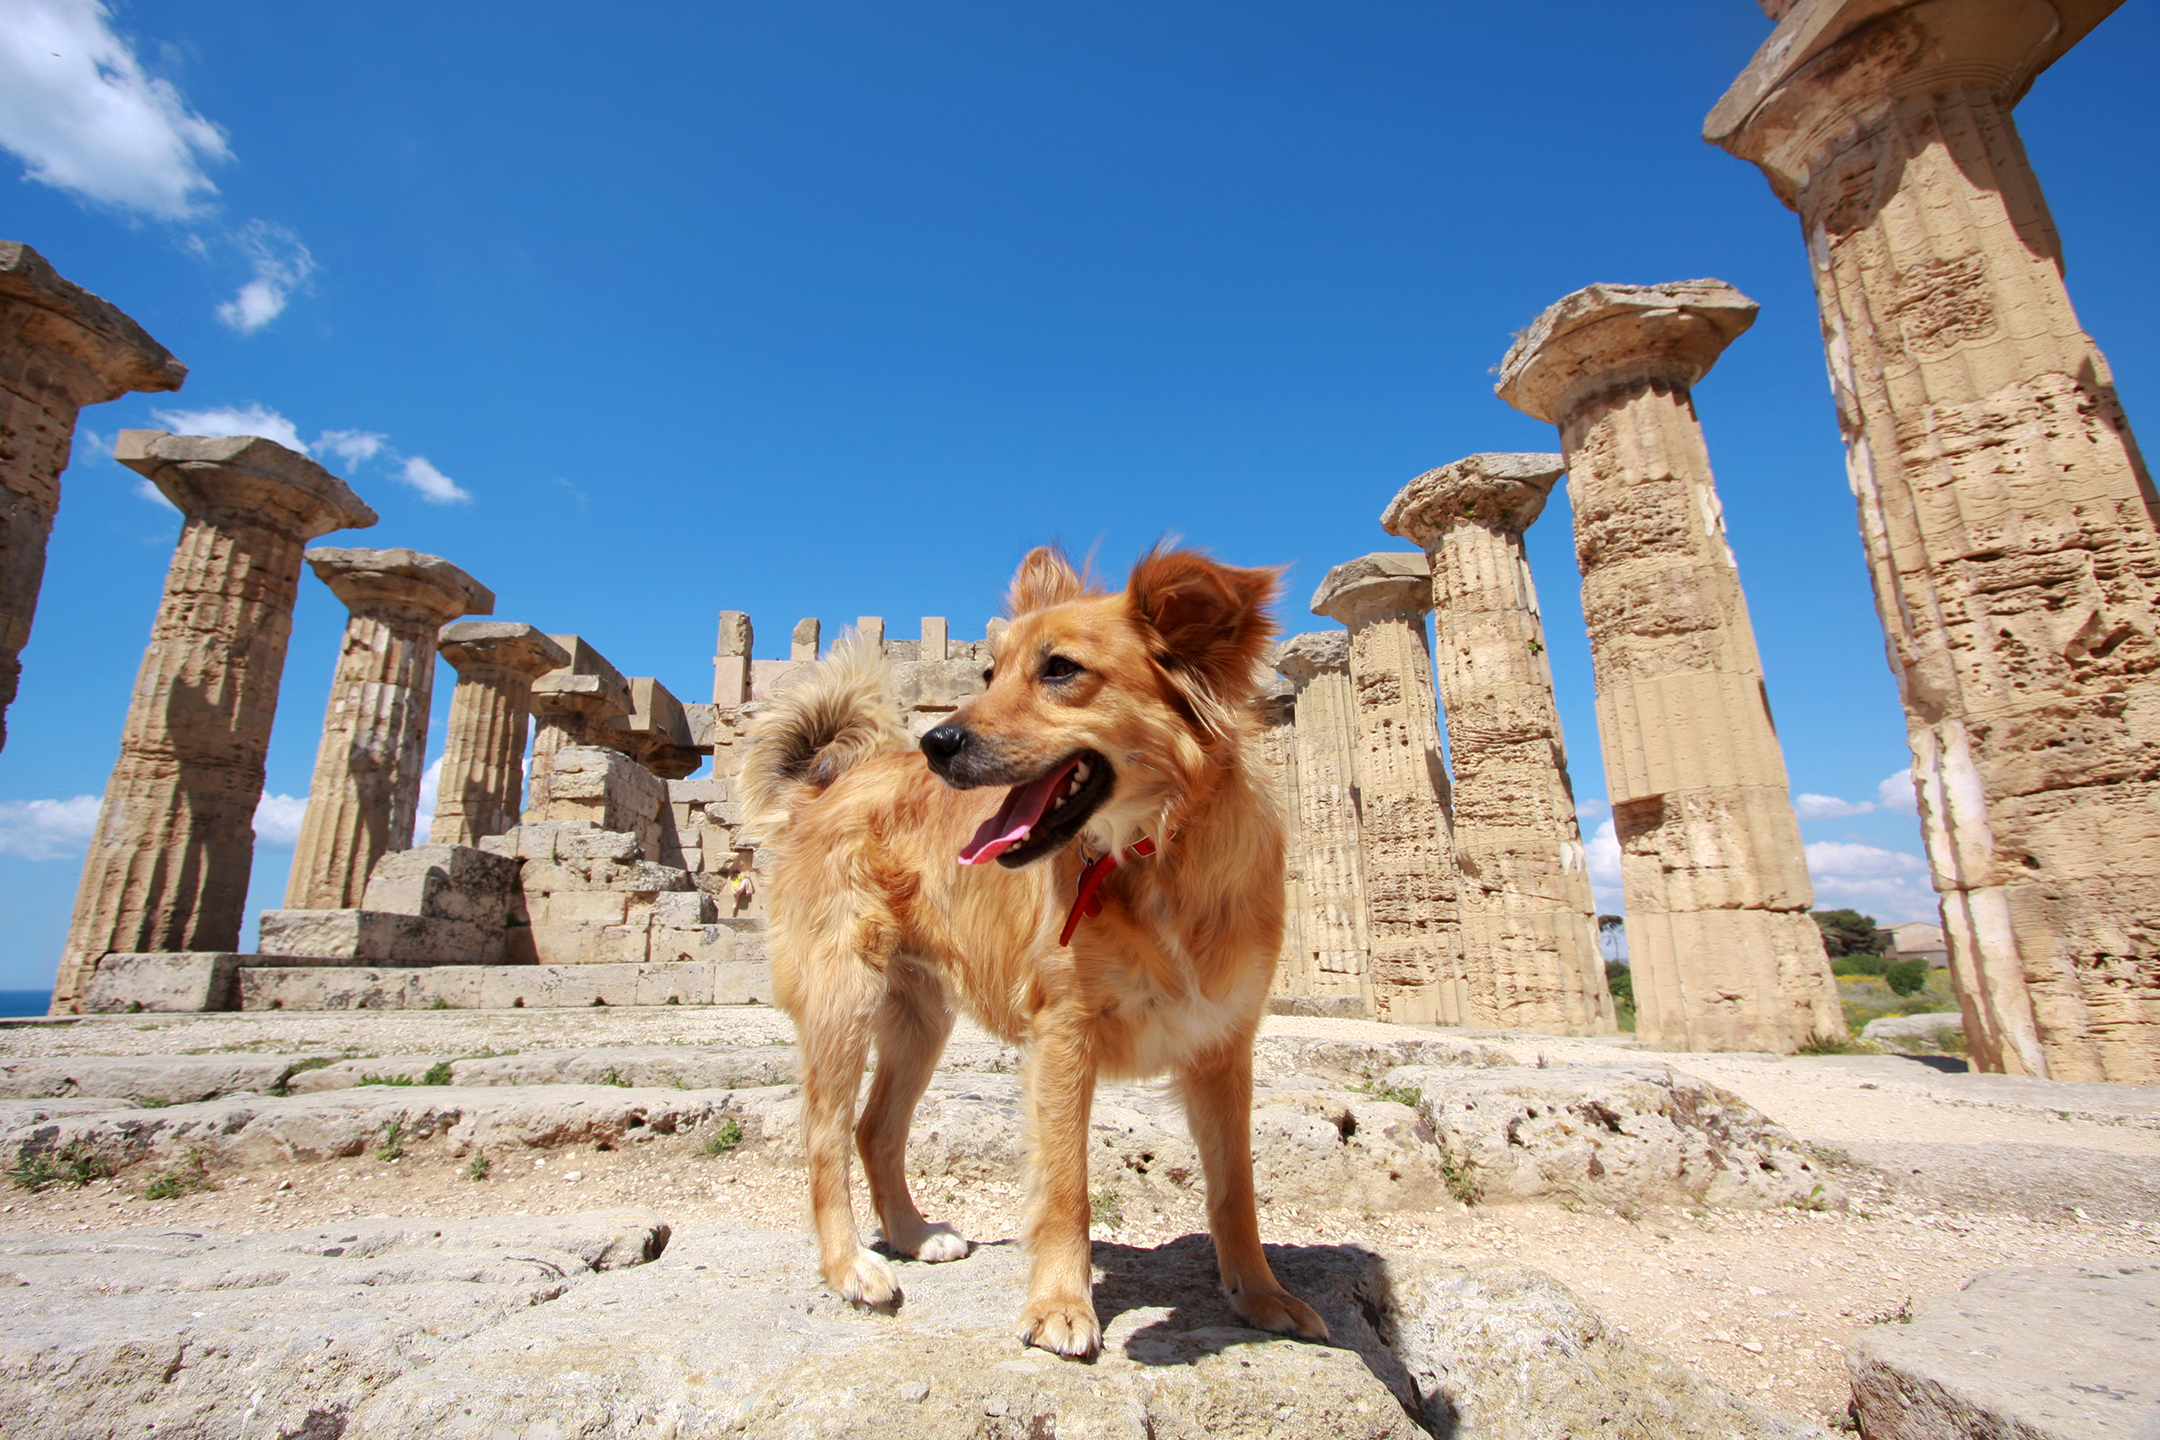 Dog standing among ancient Roman ruins and columns